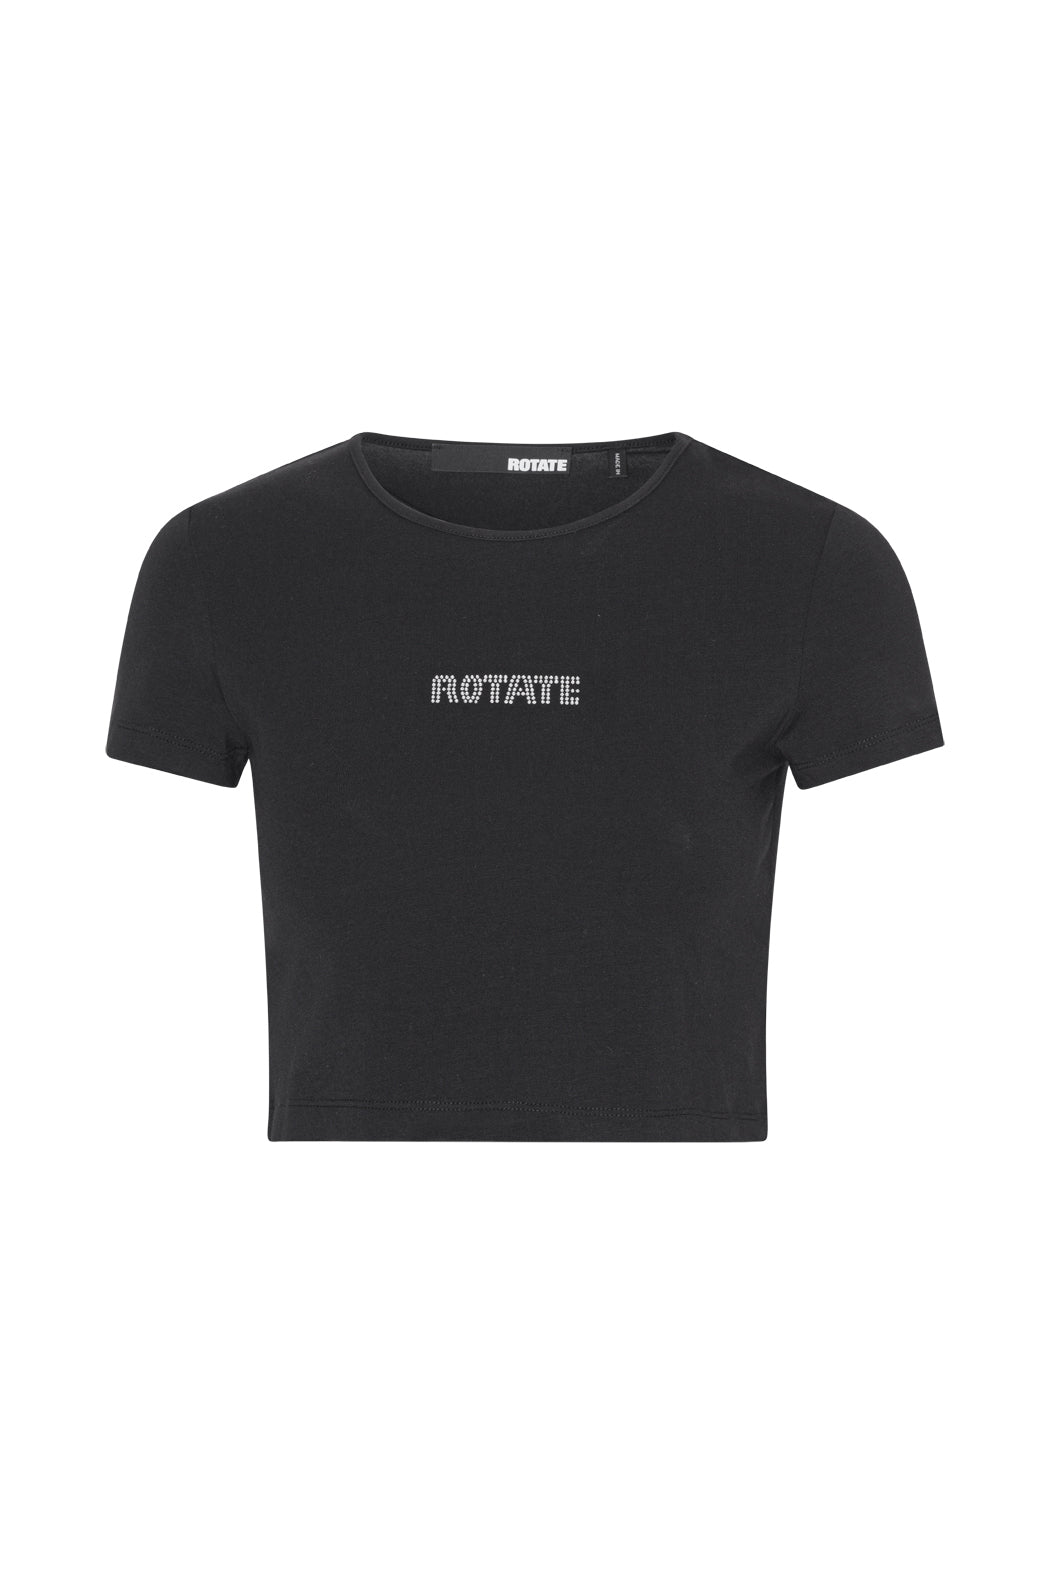 Rotate Cropped Logo T-Shirt